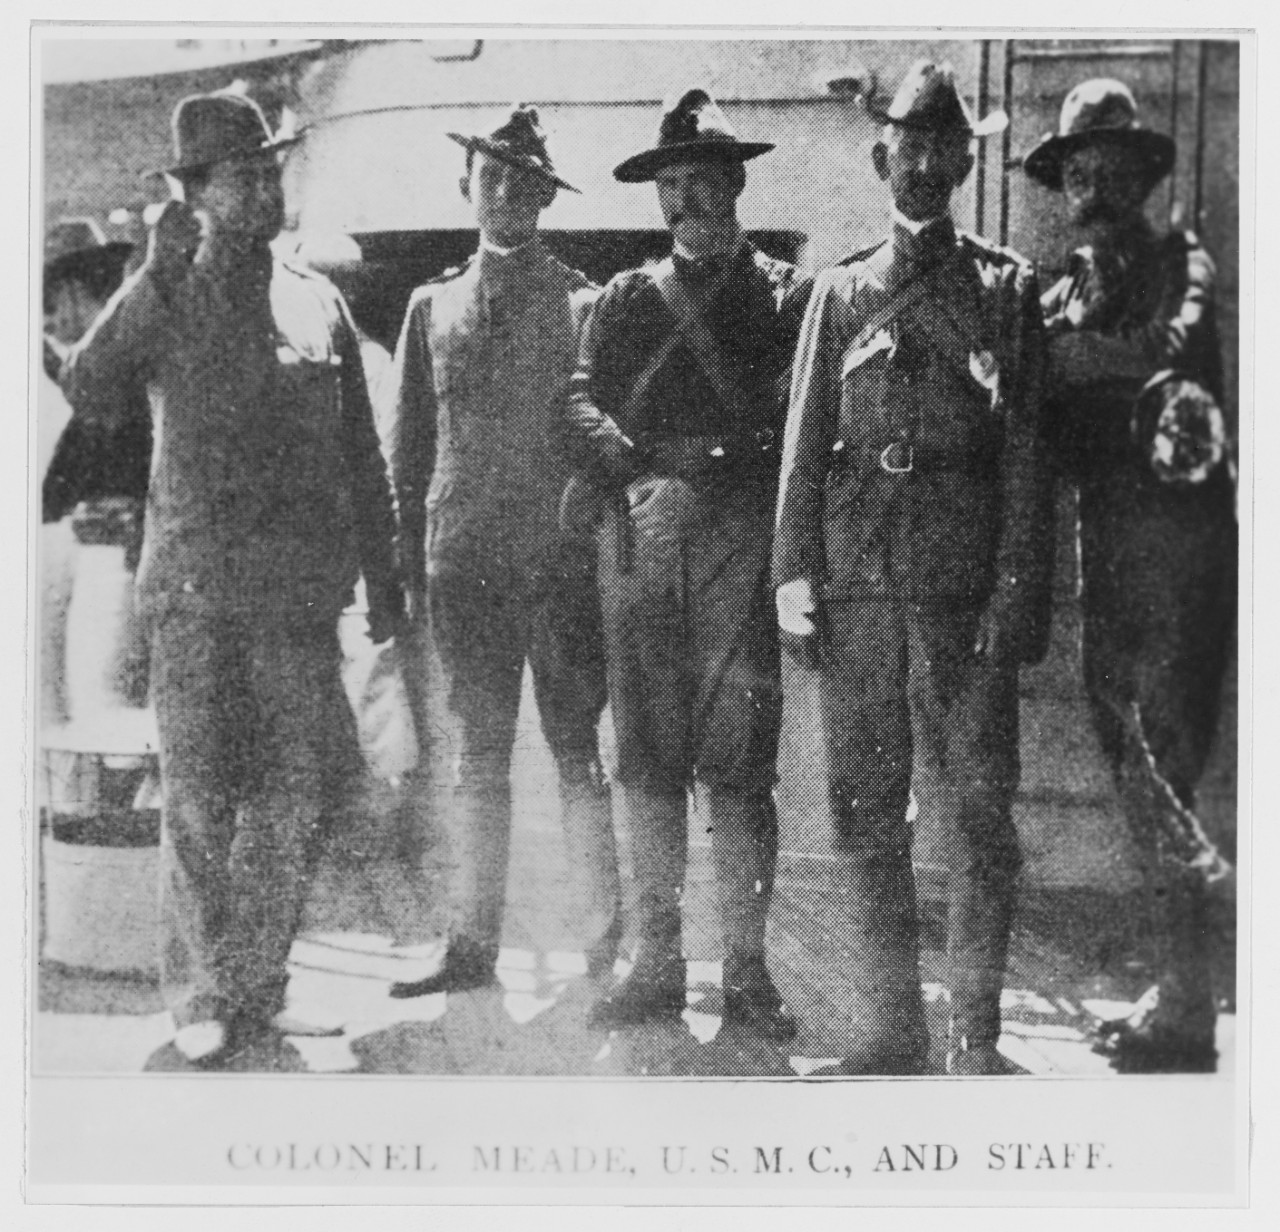 Colonel Robert L. Meade, USMC. And Staff.